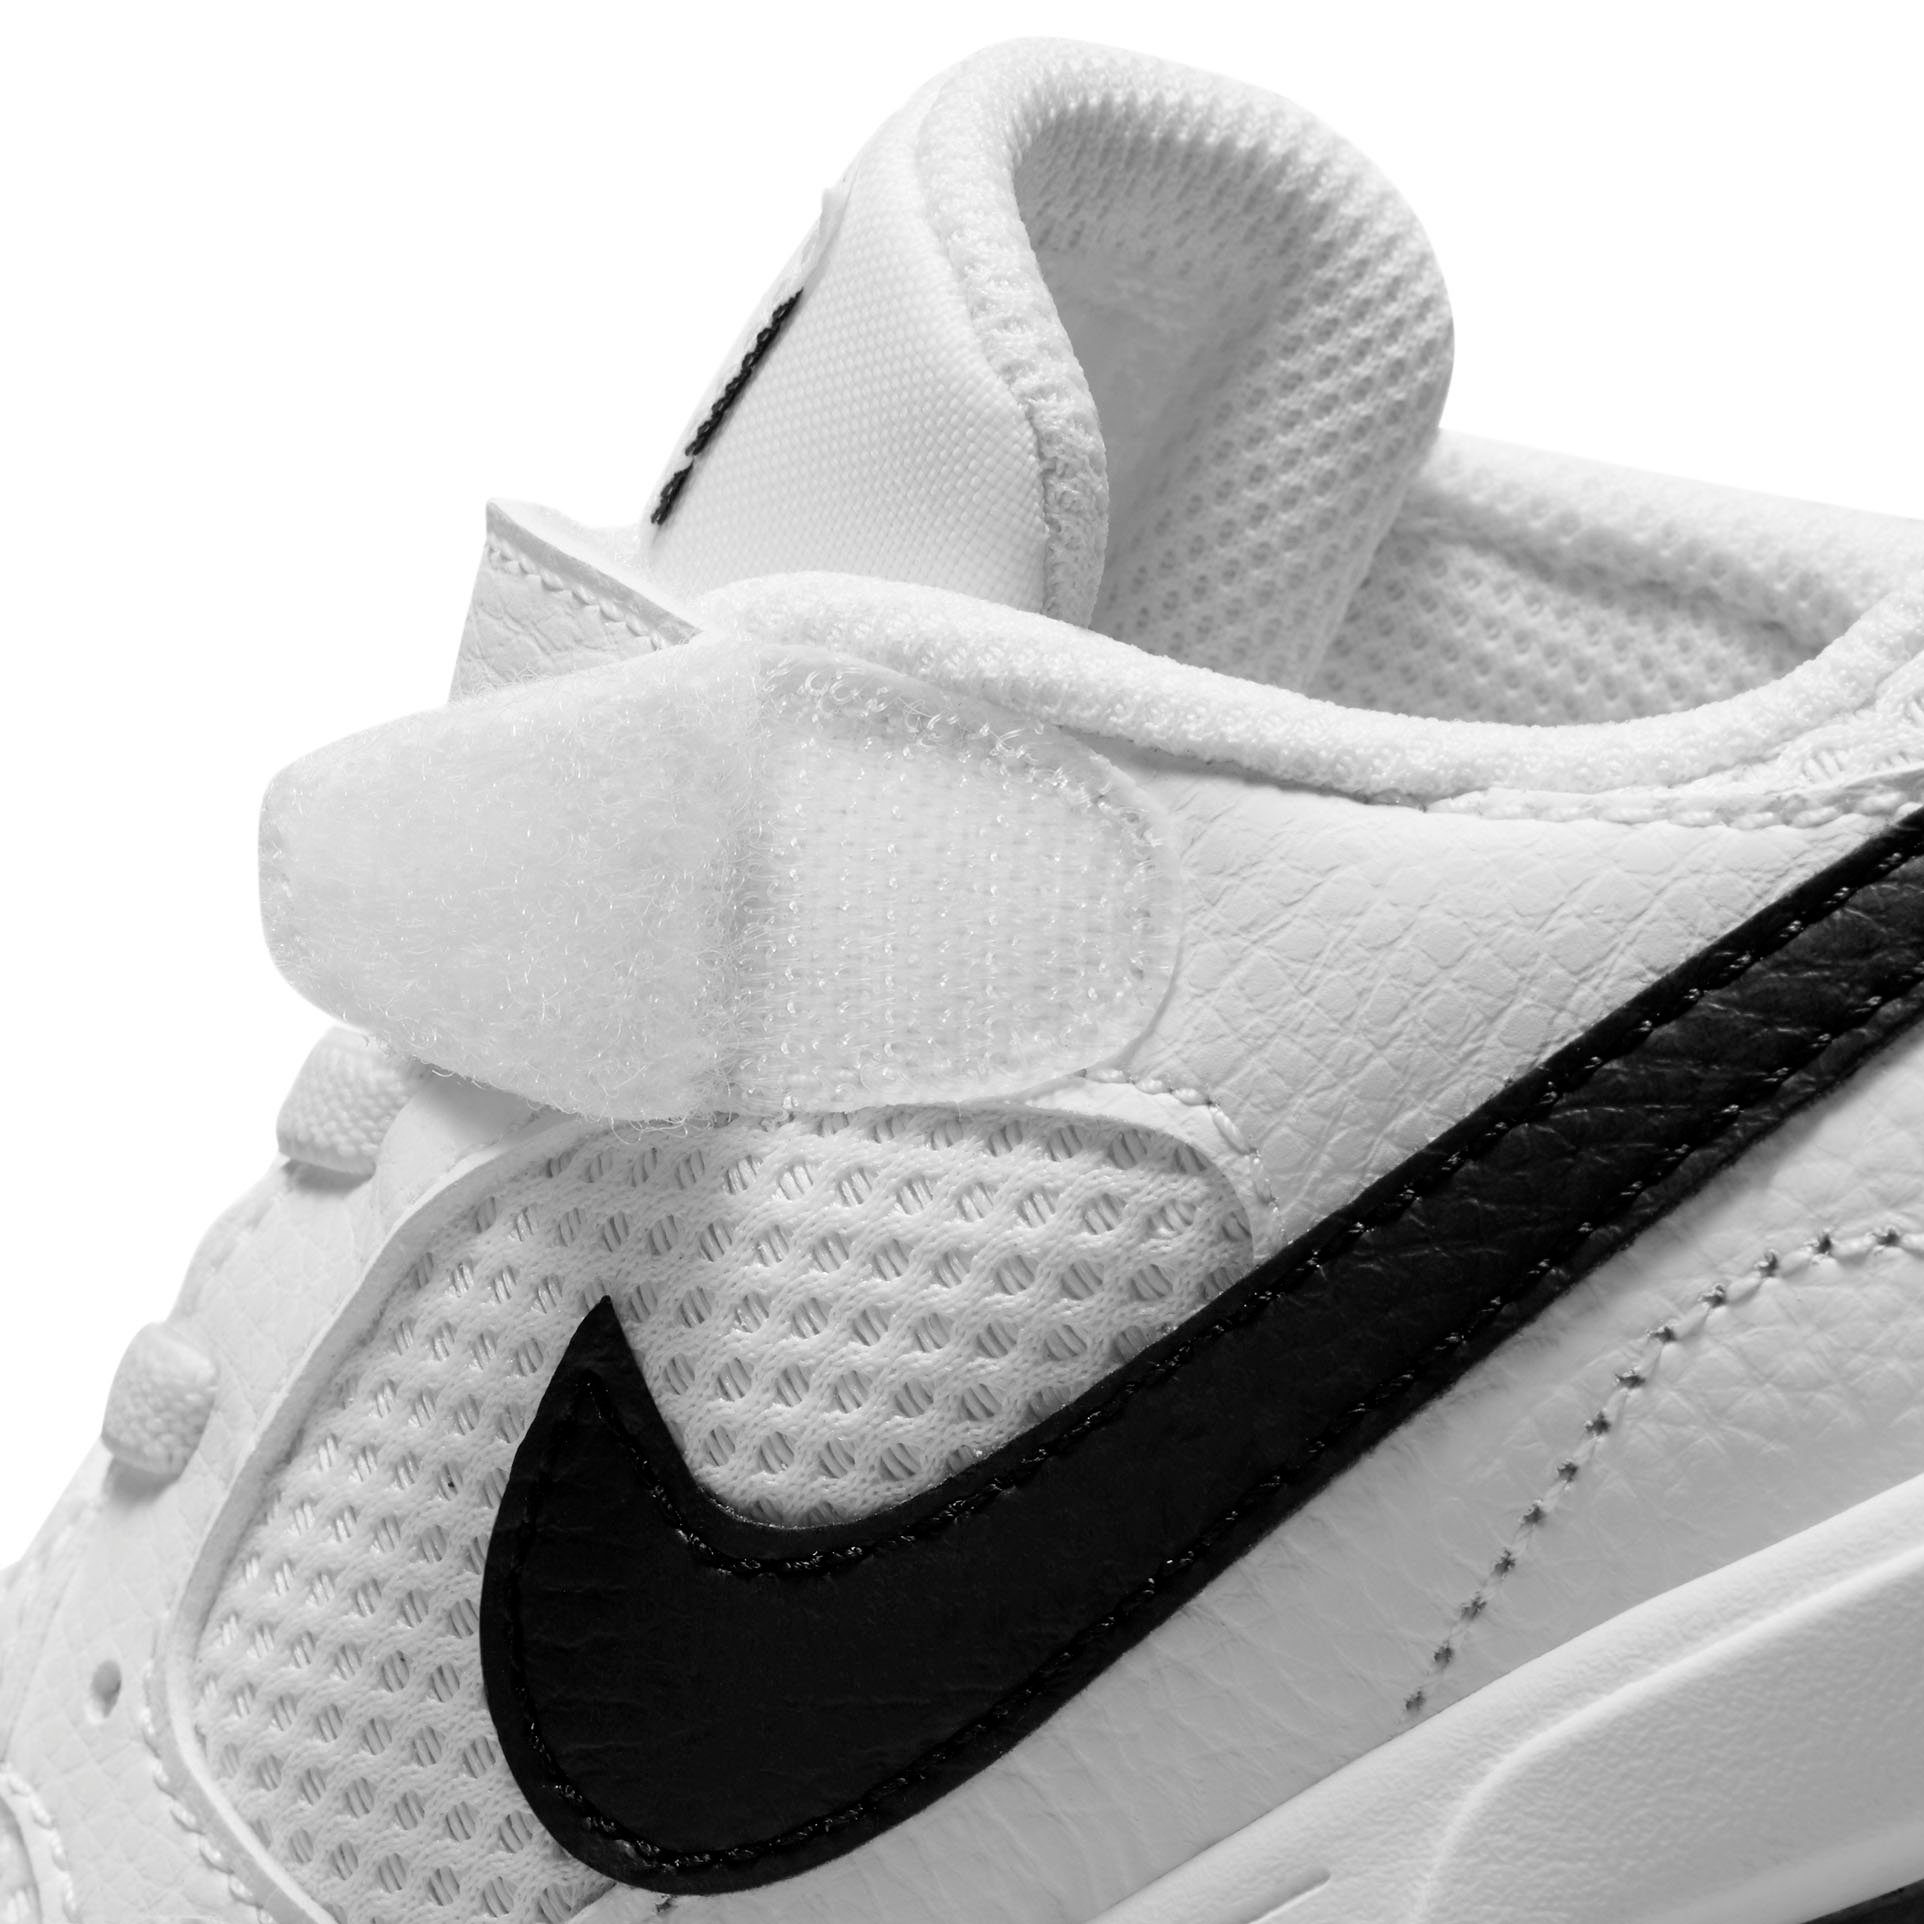 weiß-schwarz AIR SC Nike Sportswear Sneaker MAX (PS)